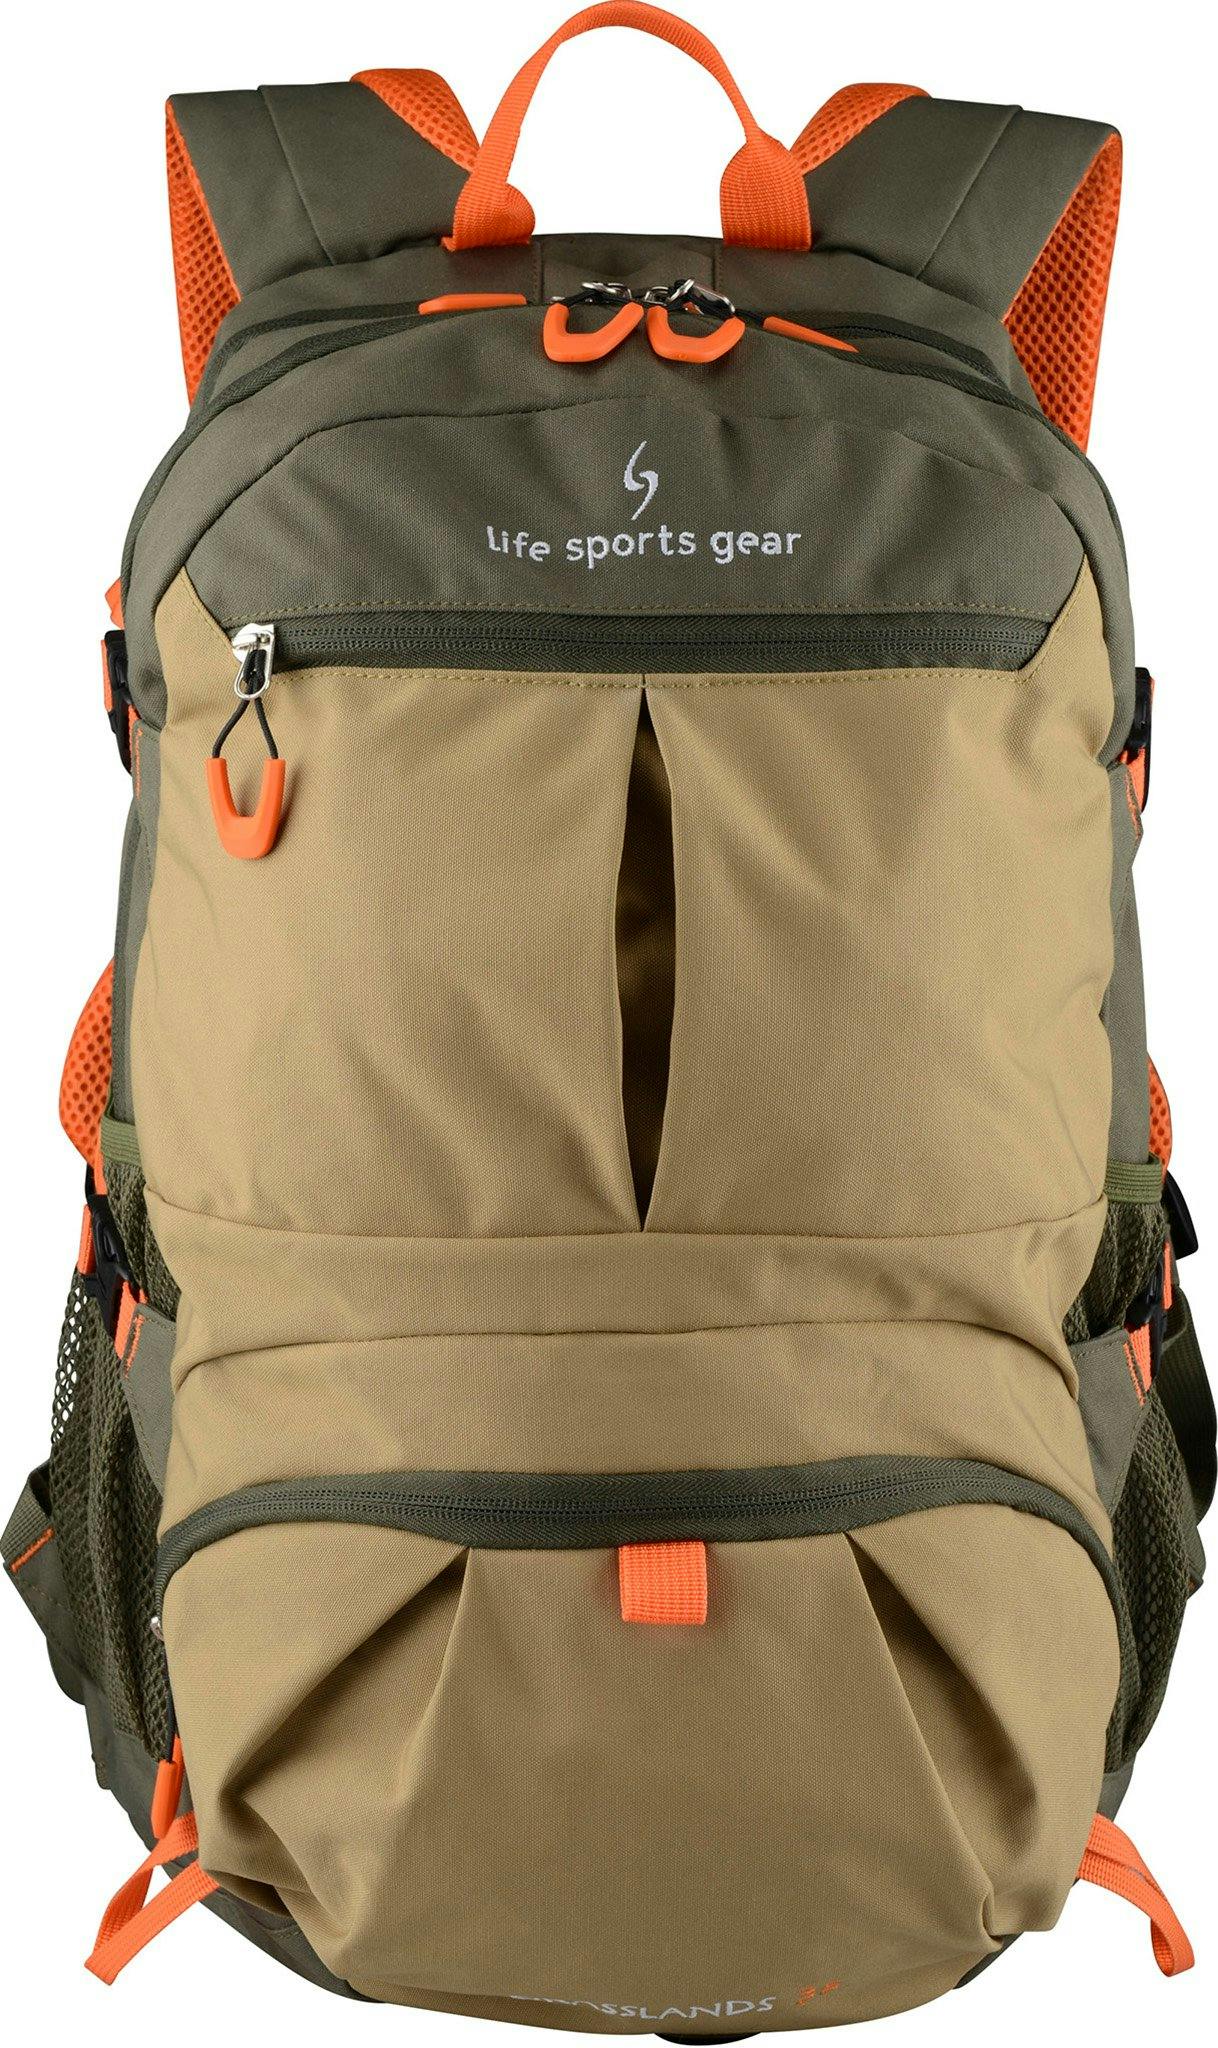 Product image for Grassland Hiking Backpack 35L